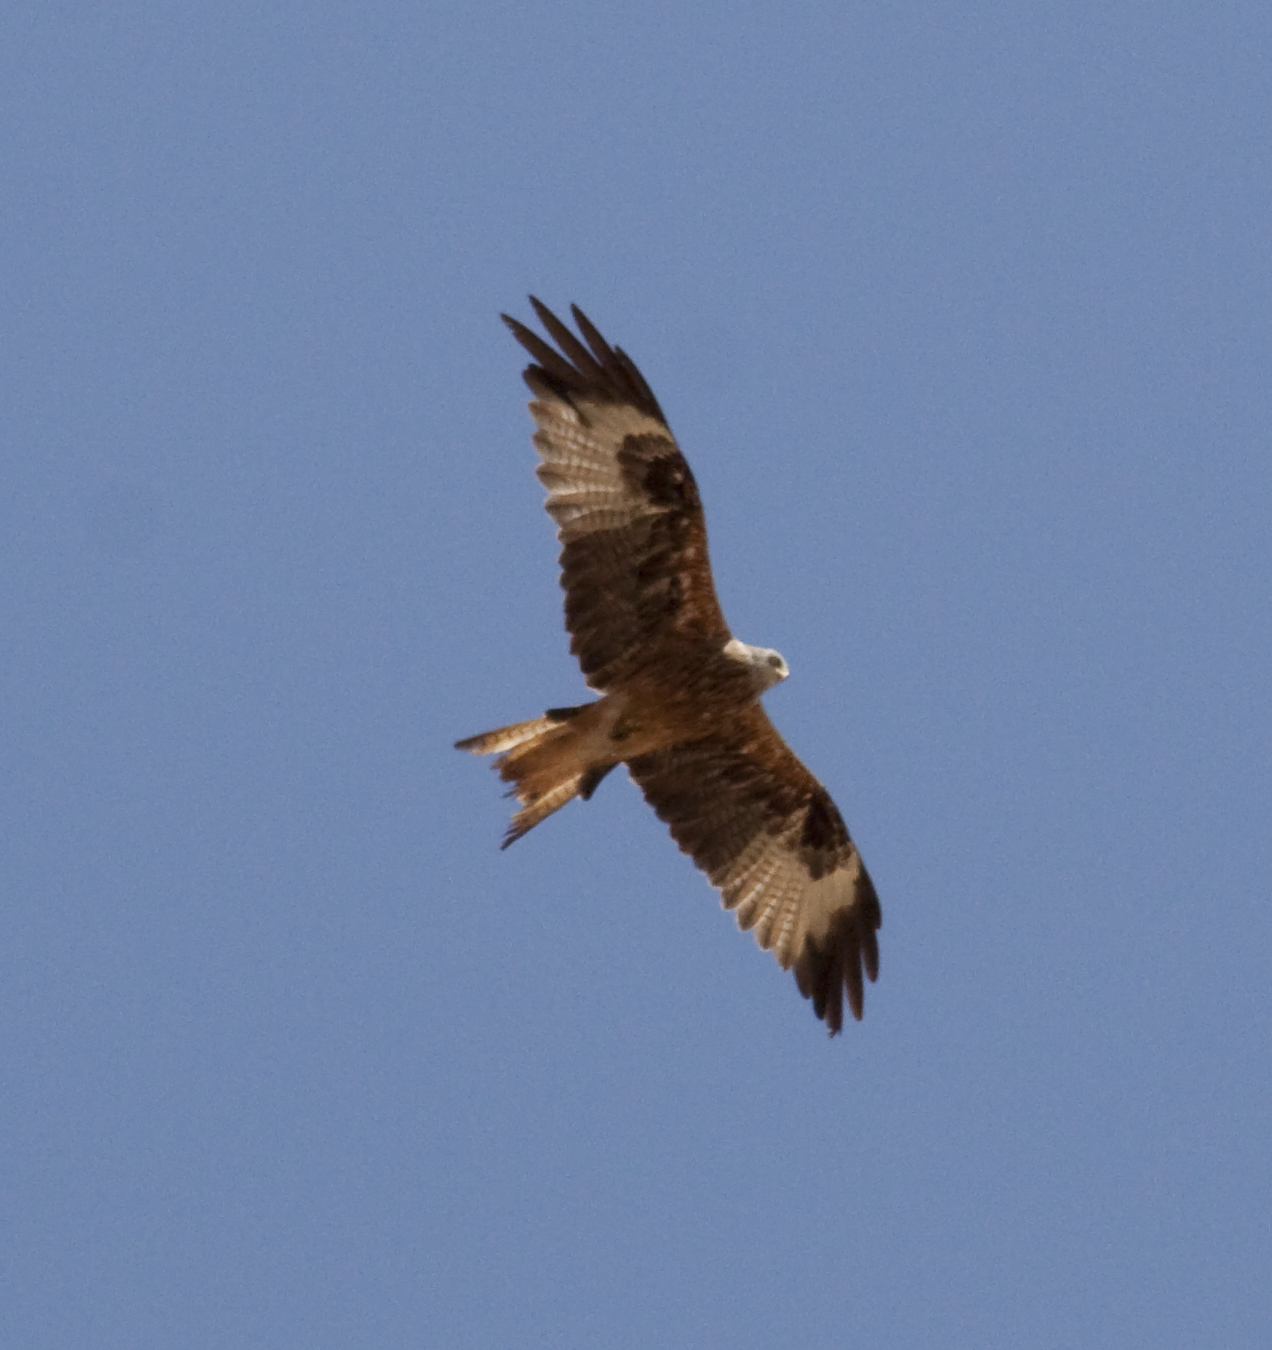 an eagle in flight against a blue sky